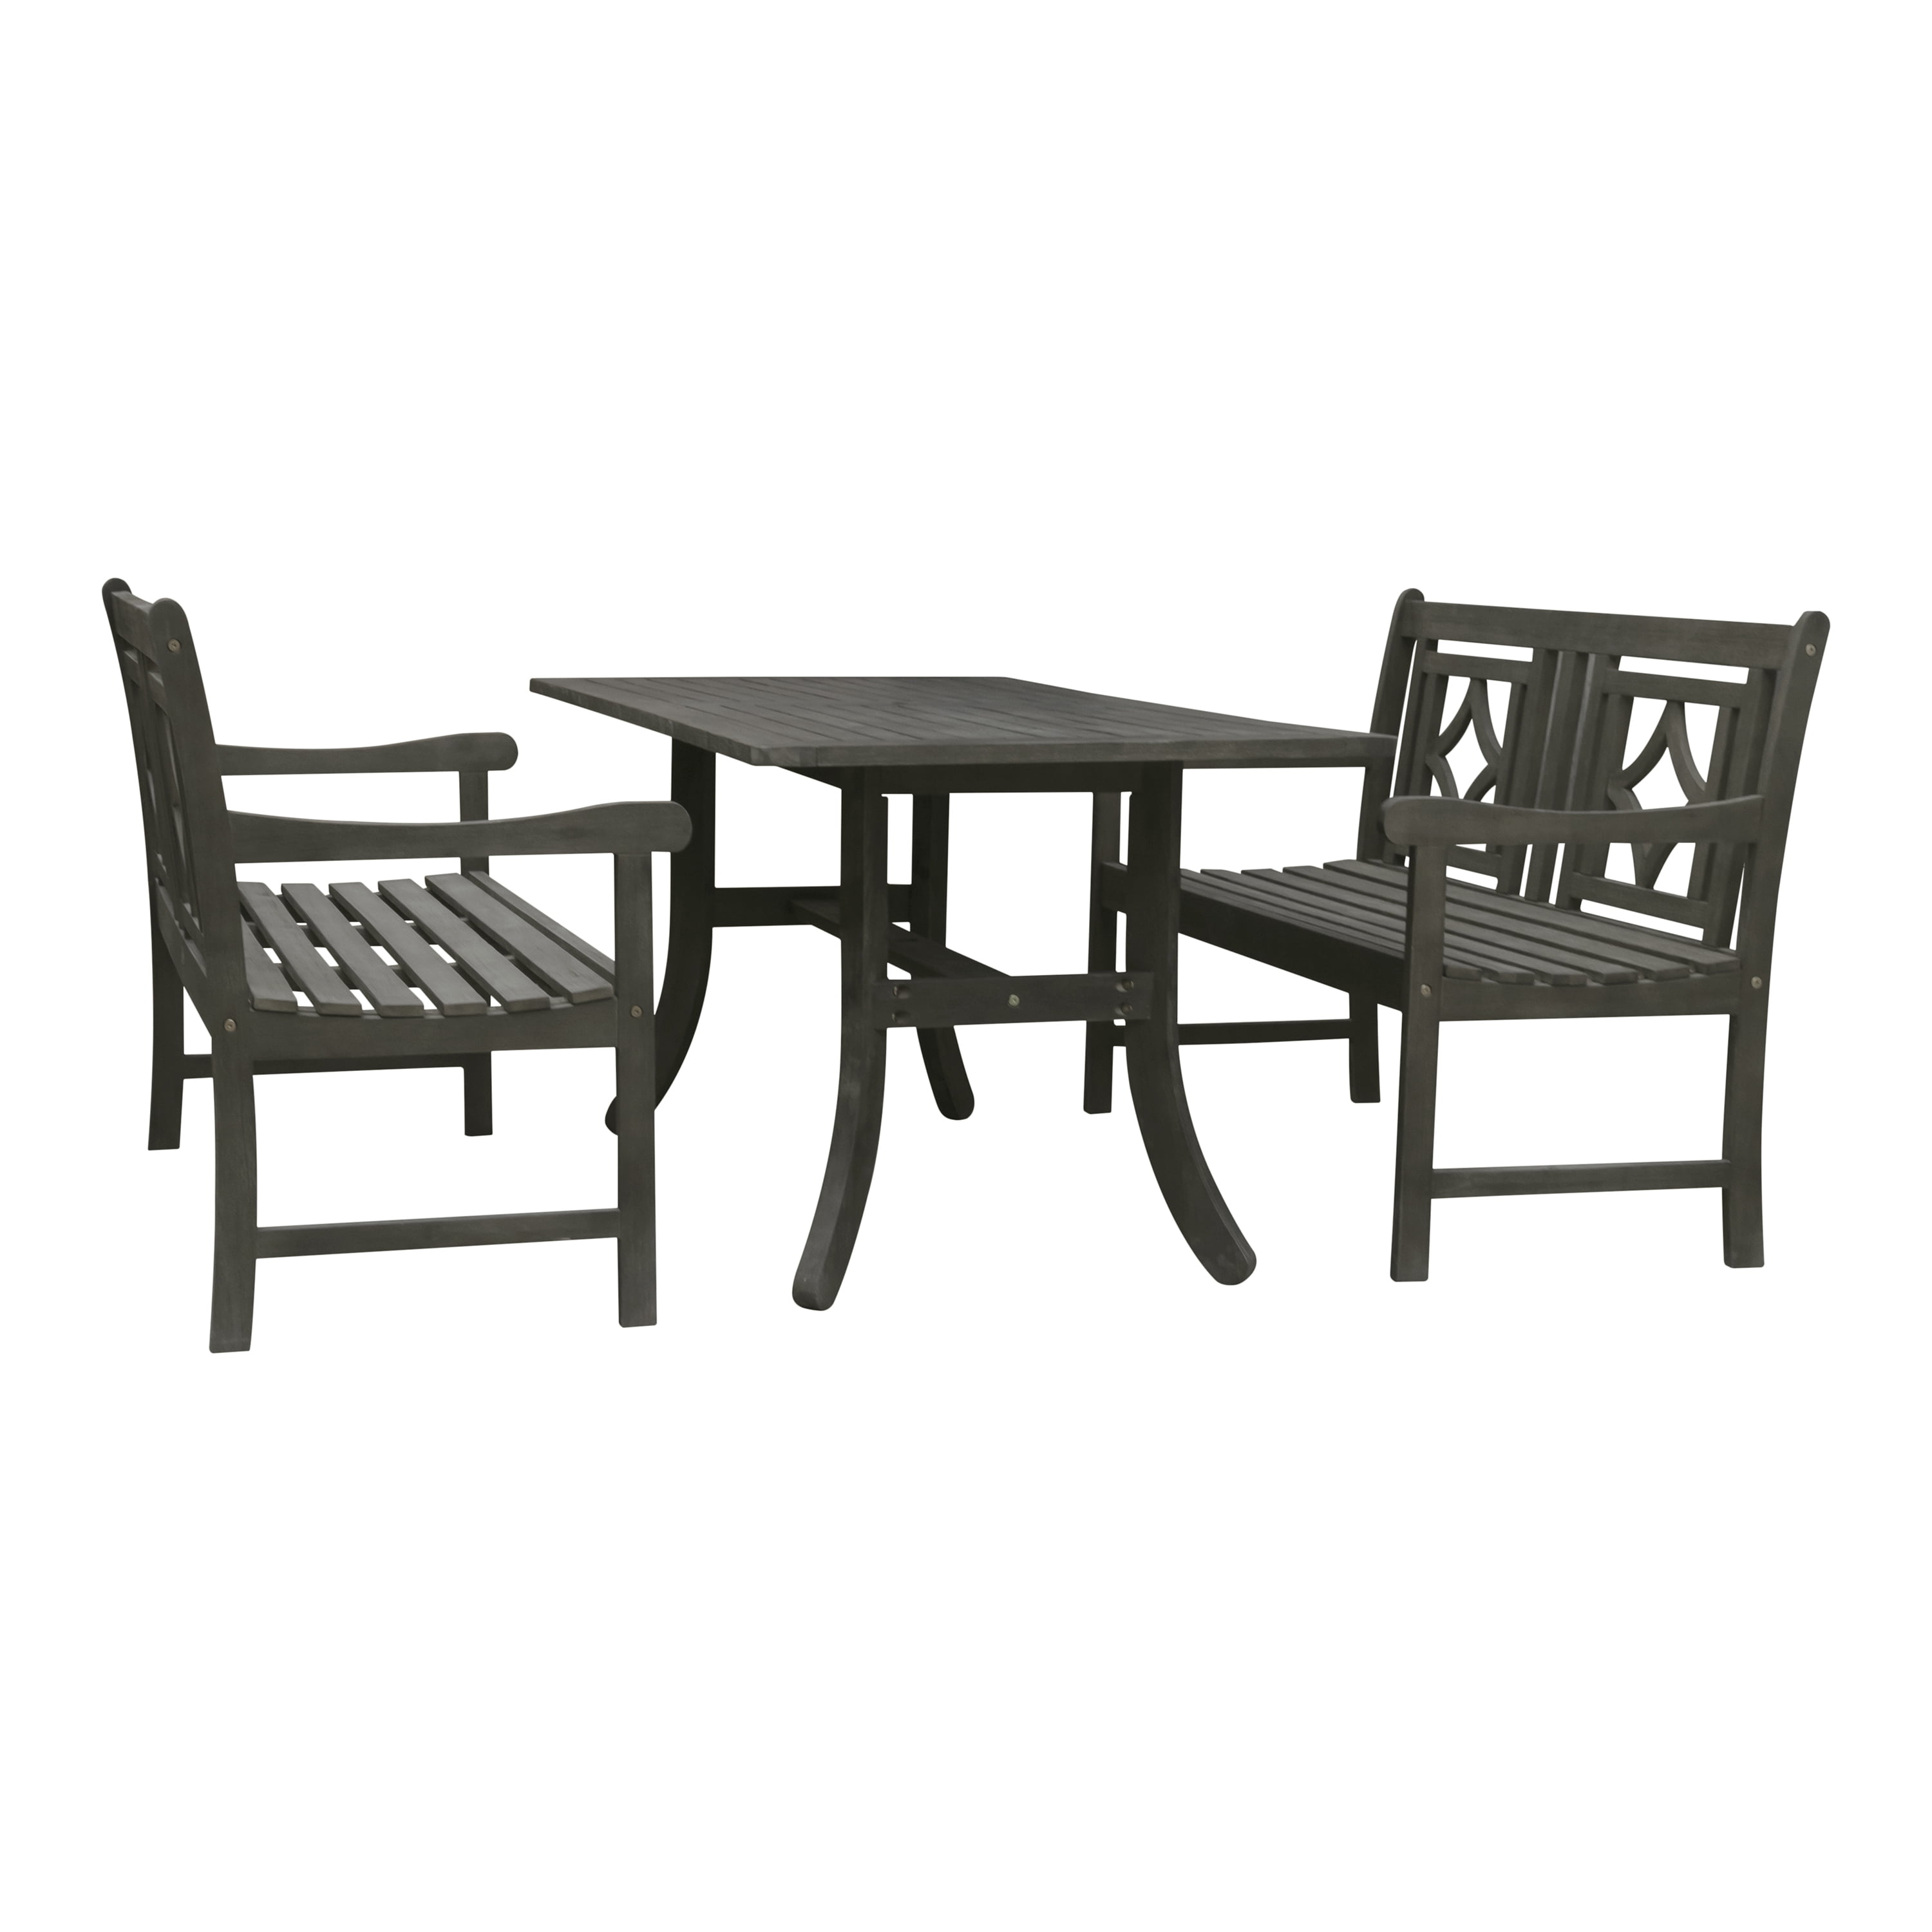 V1300set19 Renaissance Outdoor Wood Patio Curvy Legs Table Dining Set, Vista Grey - 29 X 59 X 31 In. - 3 Piece